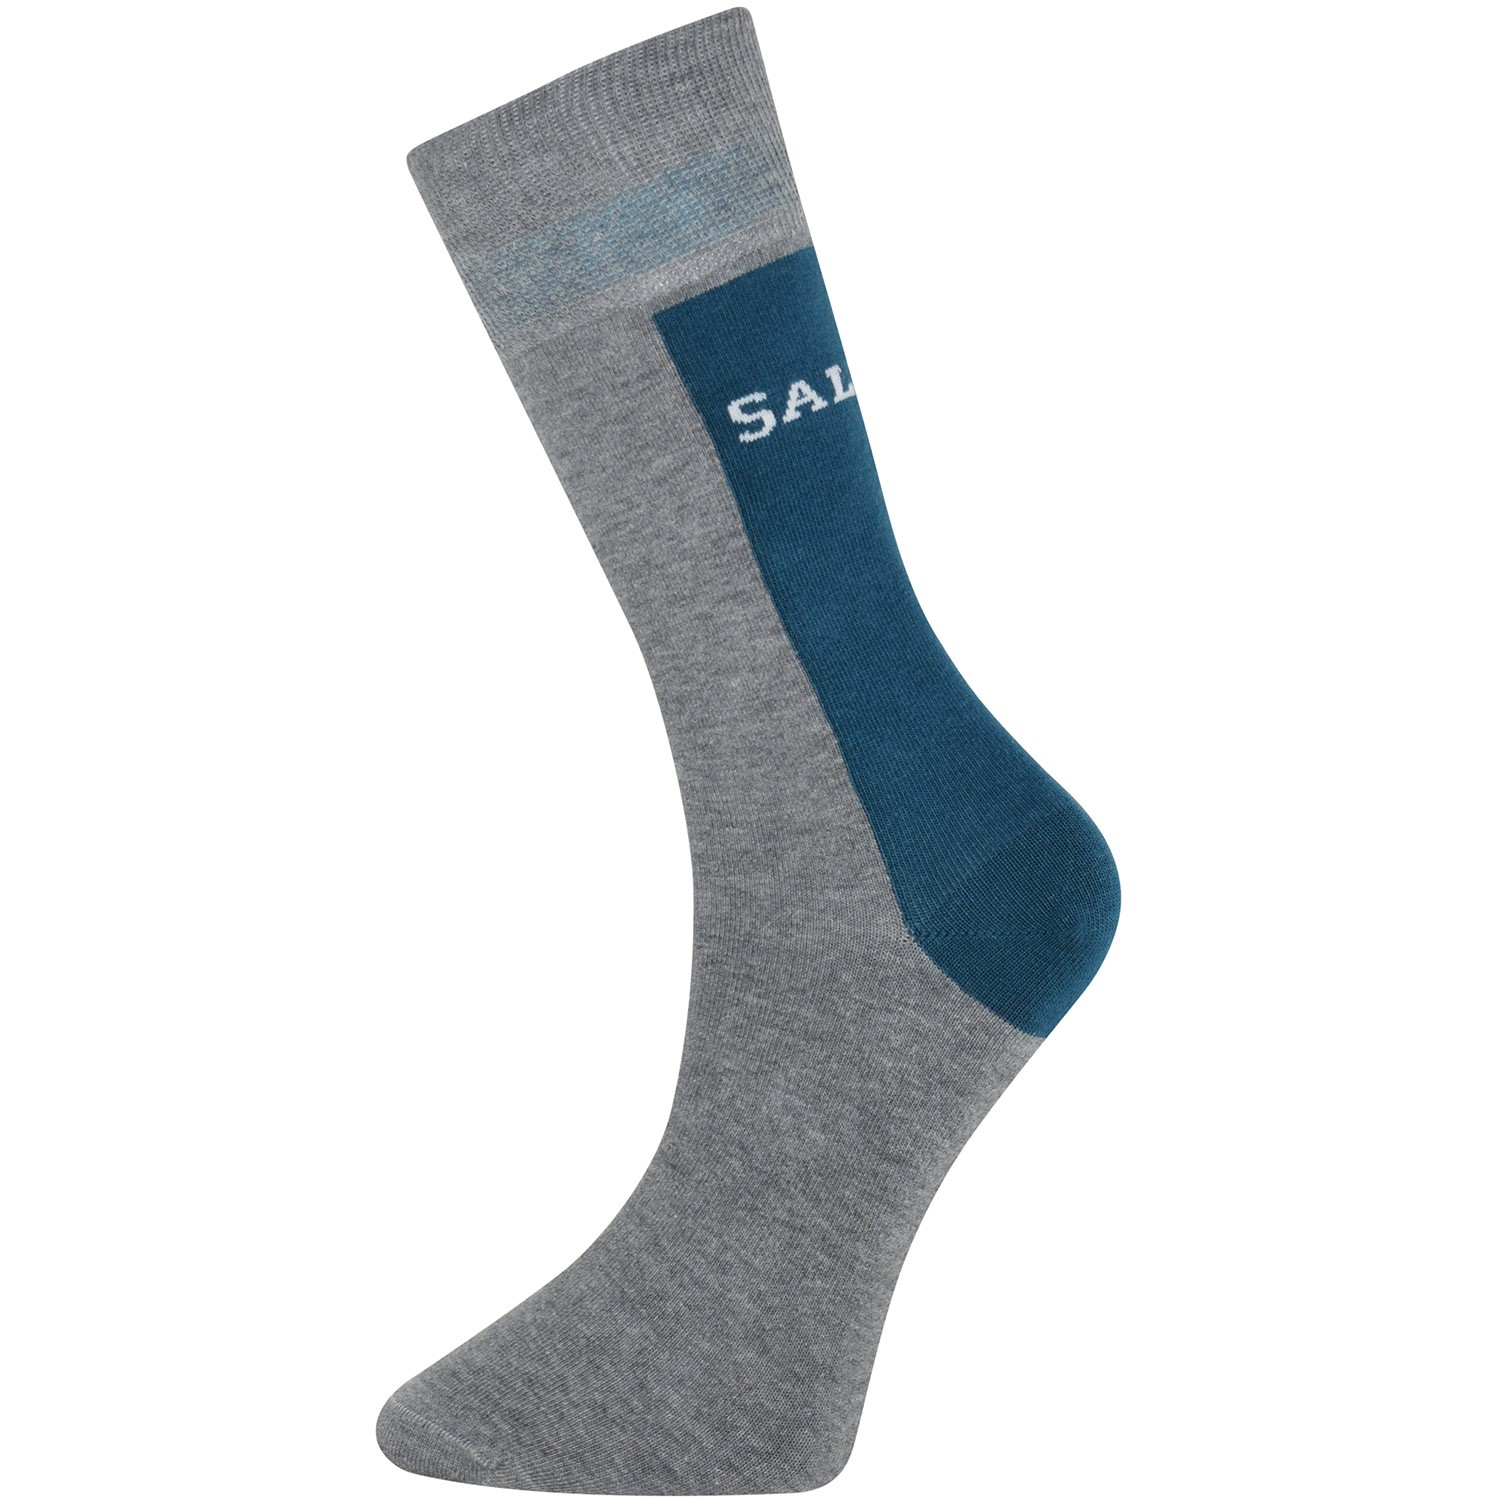 Salming Sayer Socks